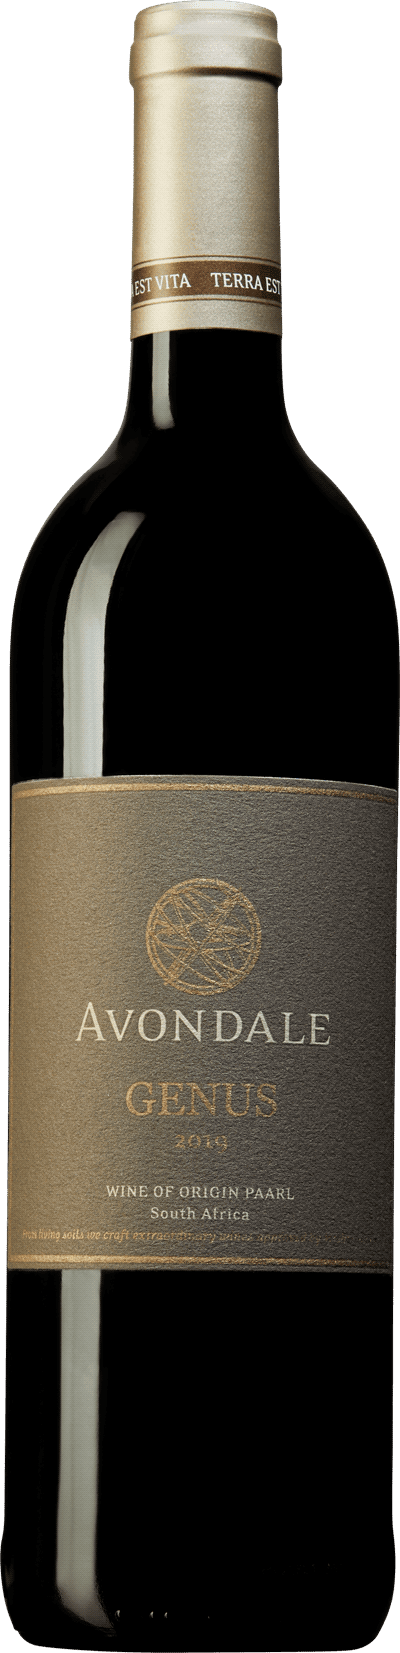 winetable_its_a_bargain_avondale_genus